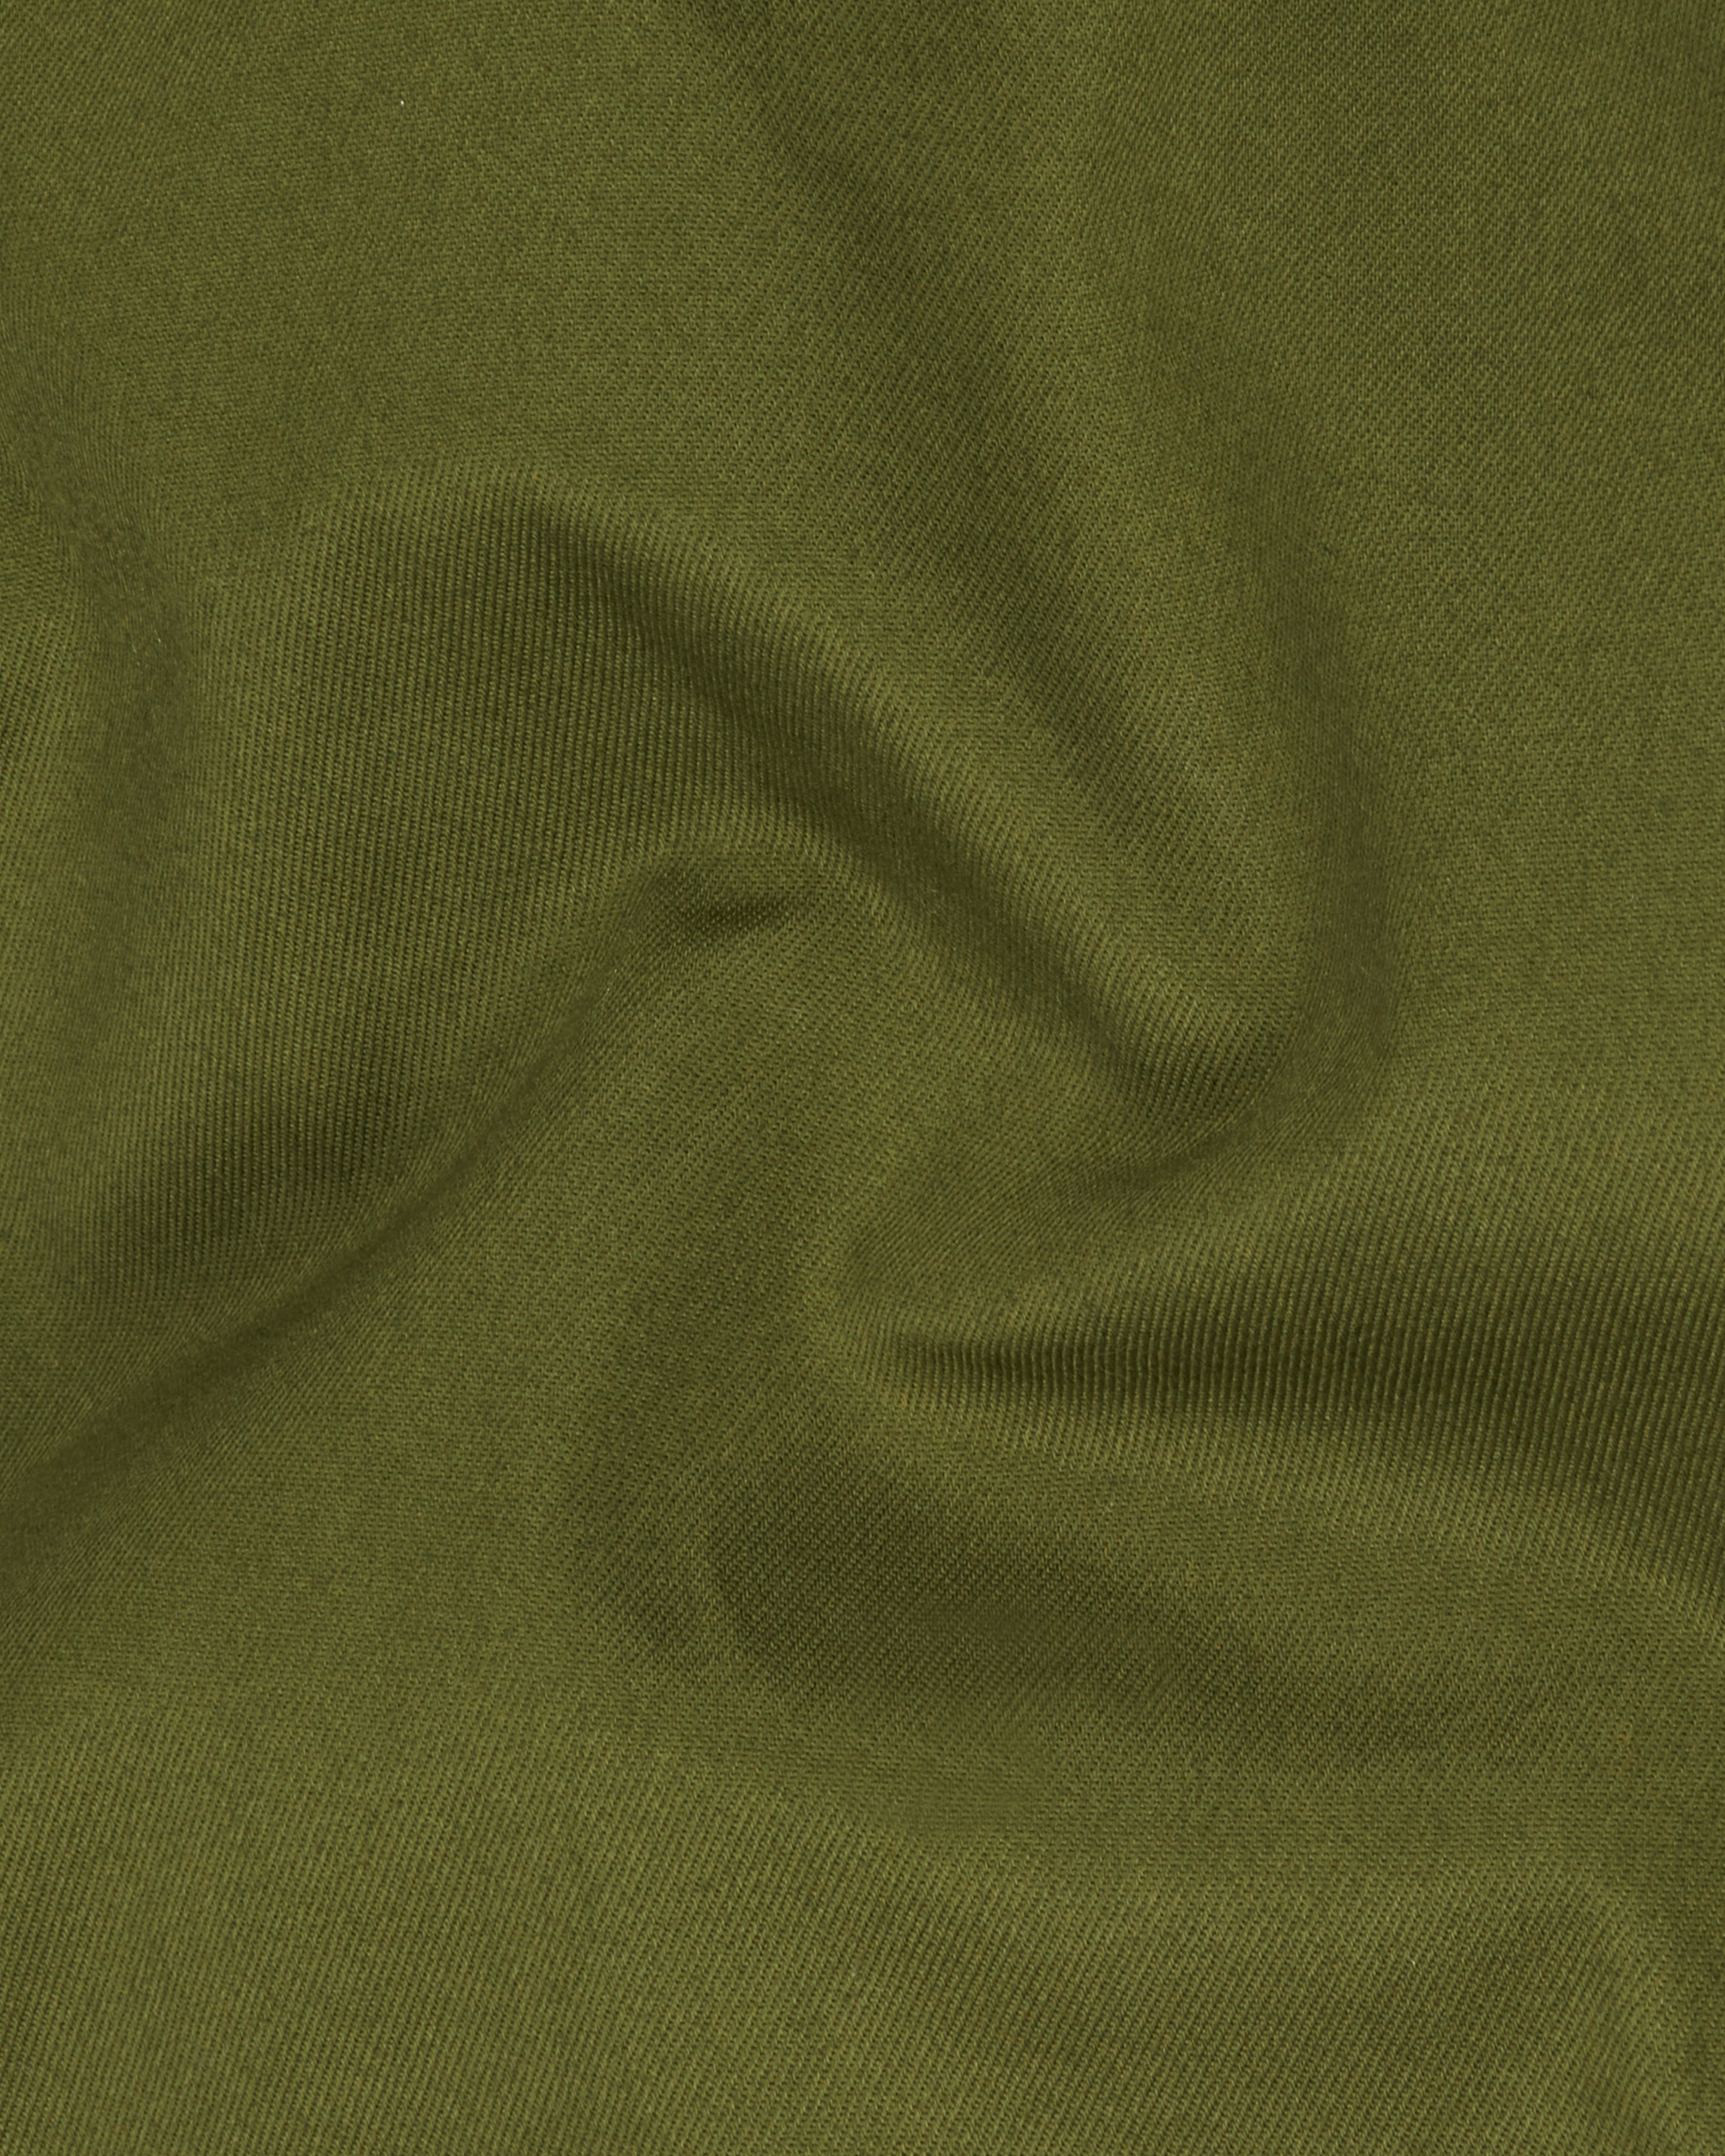 Saratoga Green Premium Cotton Pant T2317-28, T2317-30, T2317-32, T2317-34, T2317-36, T2317-38, T2317-40, T2317-42, T2317-44